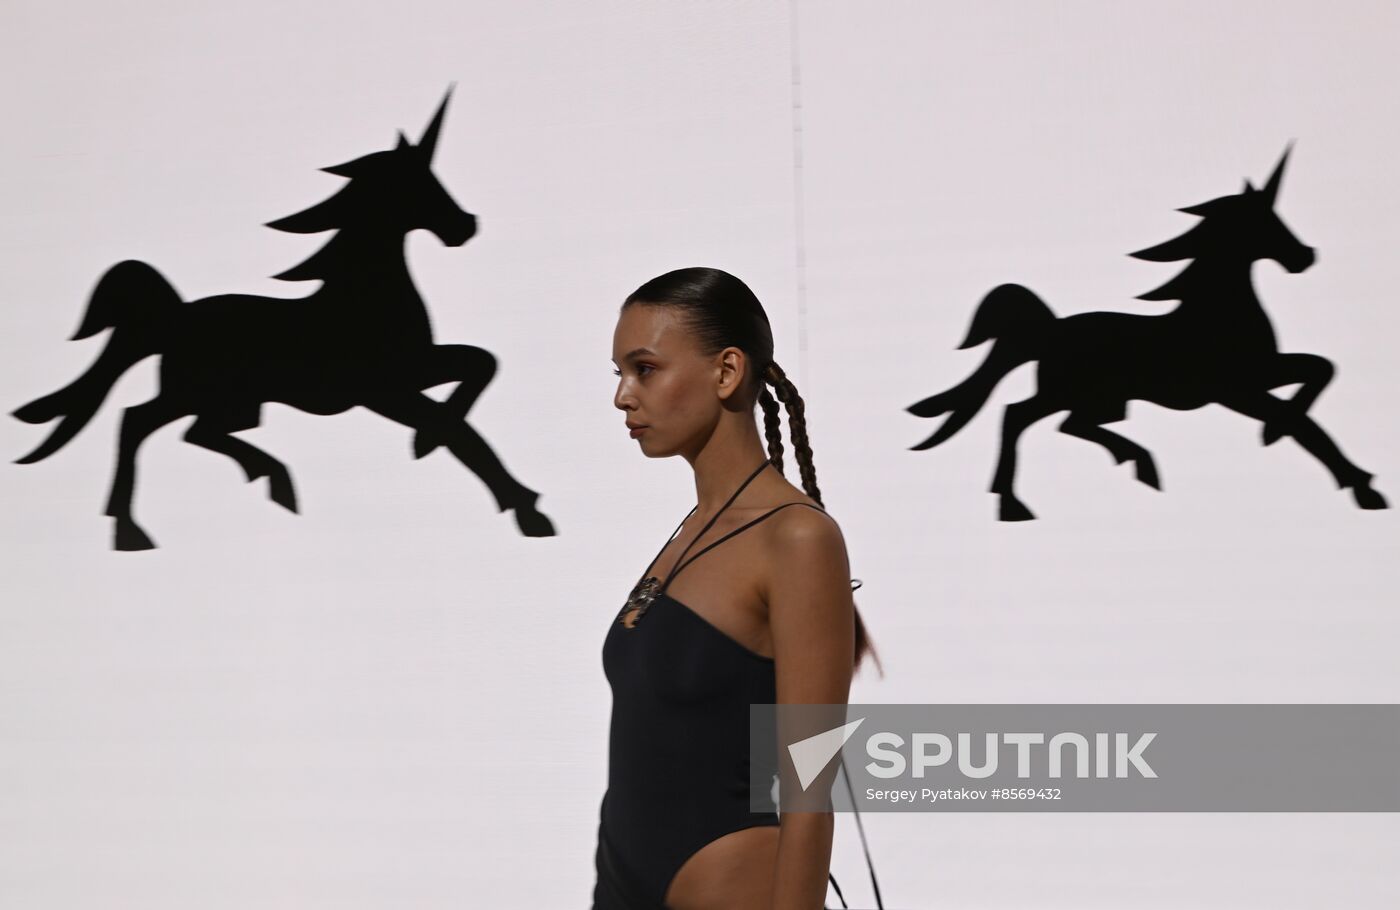 Russia BRICS Fashion Summit Show